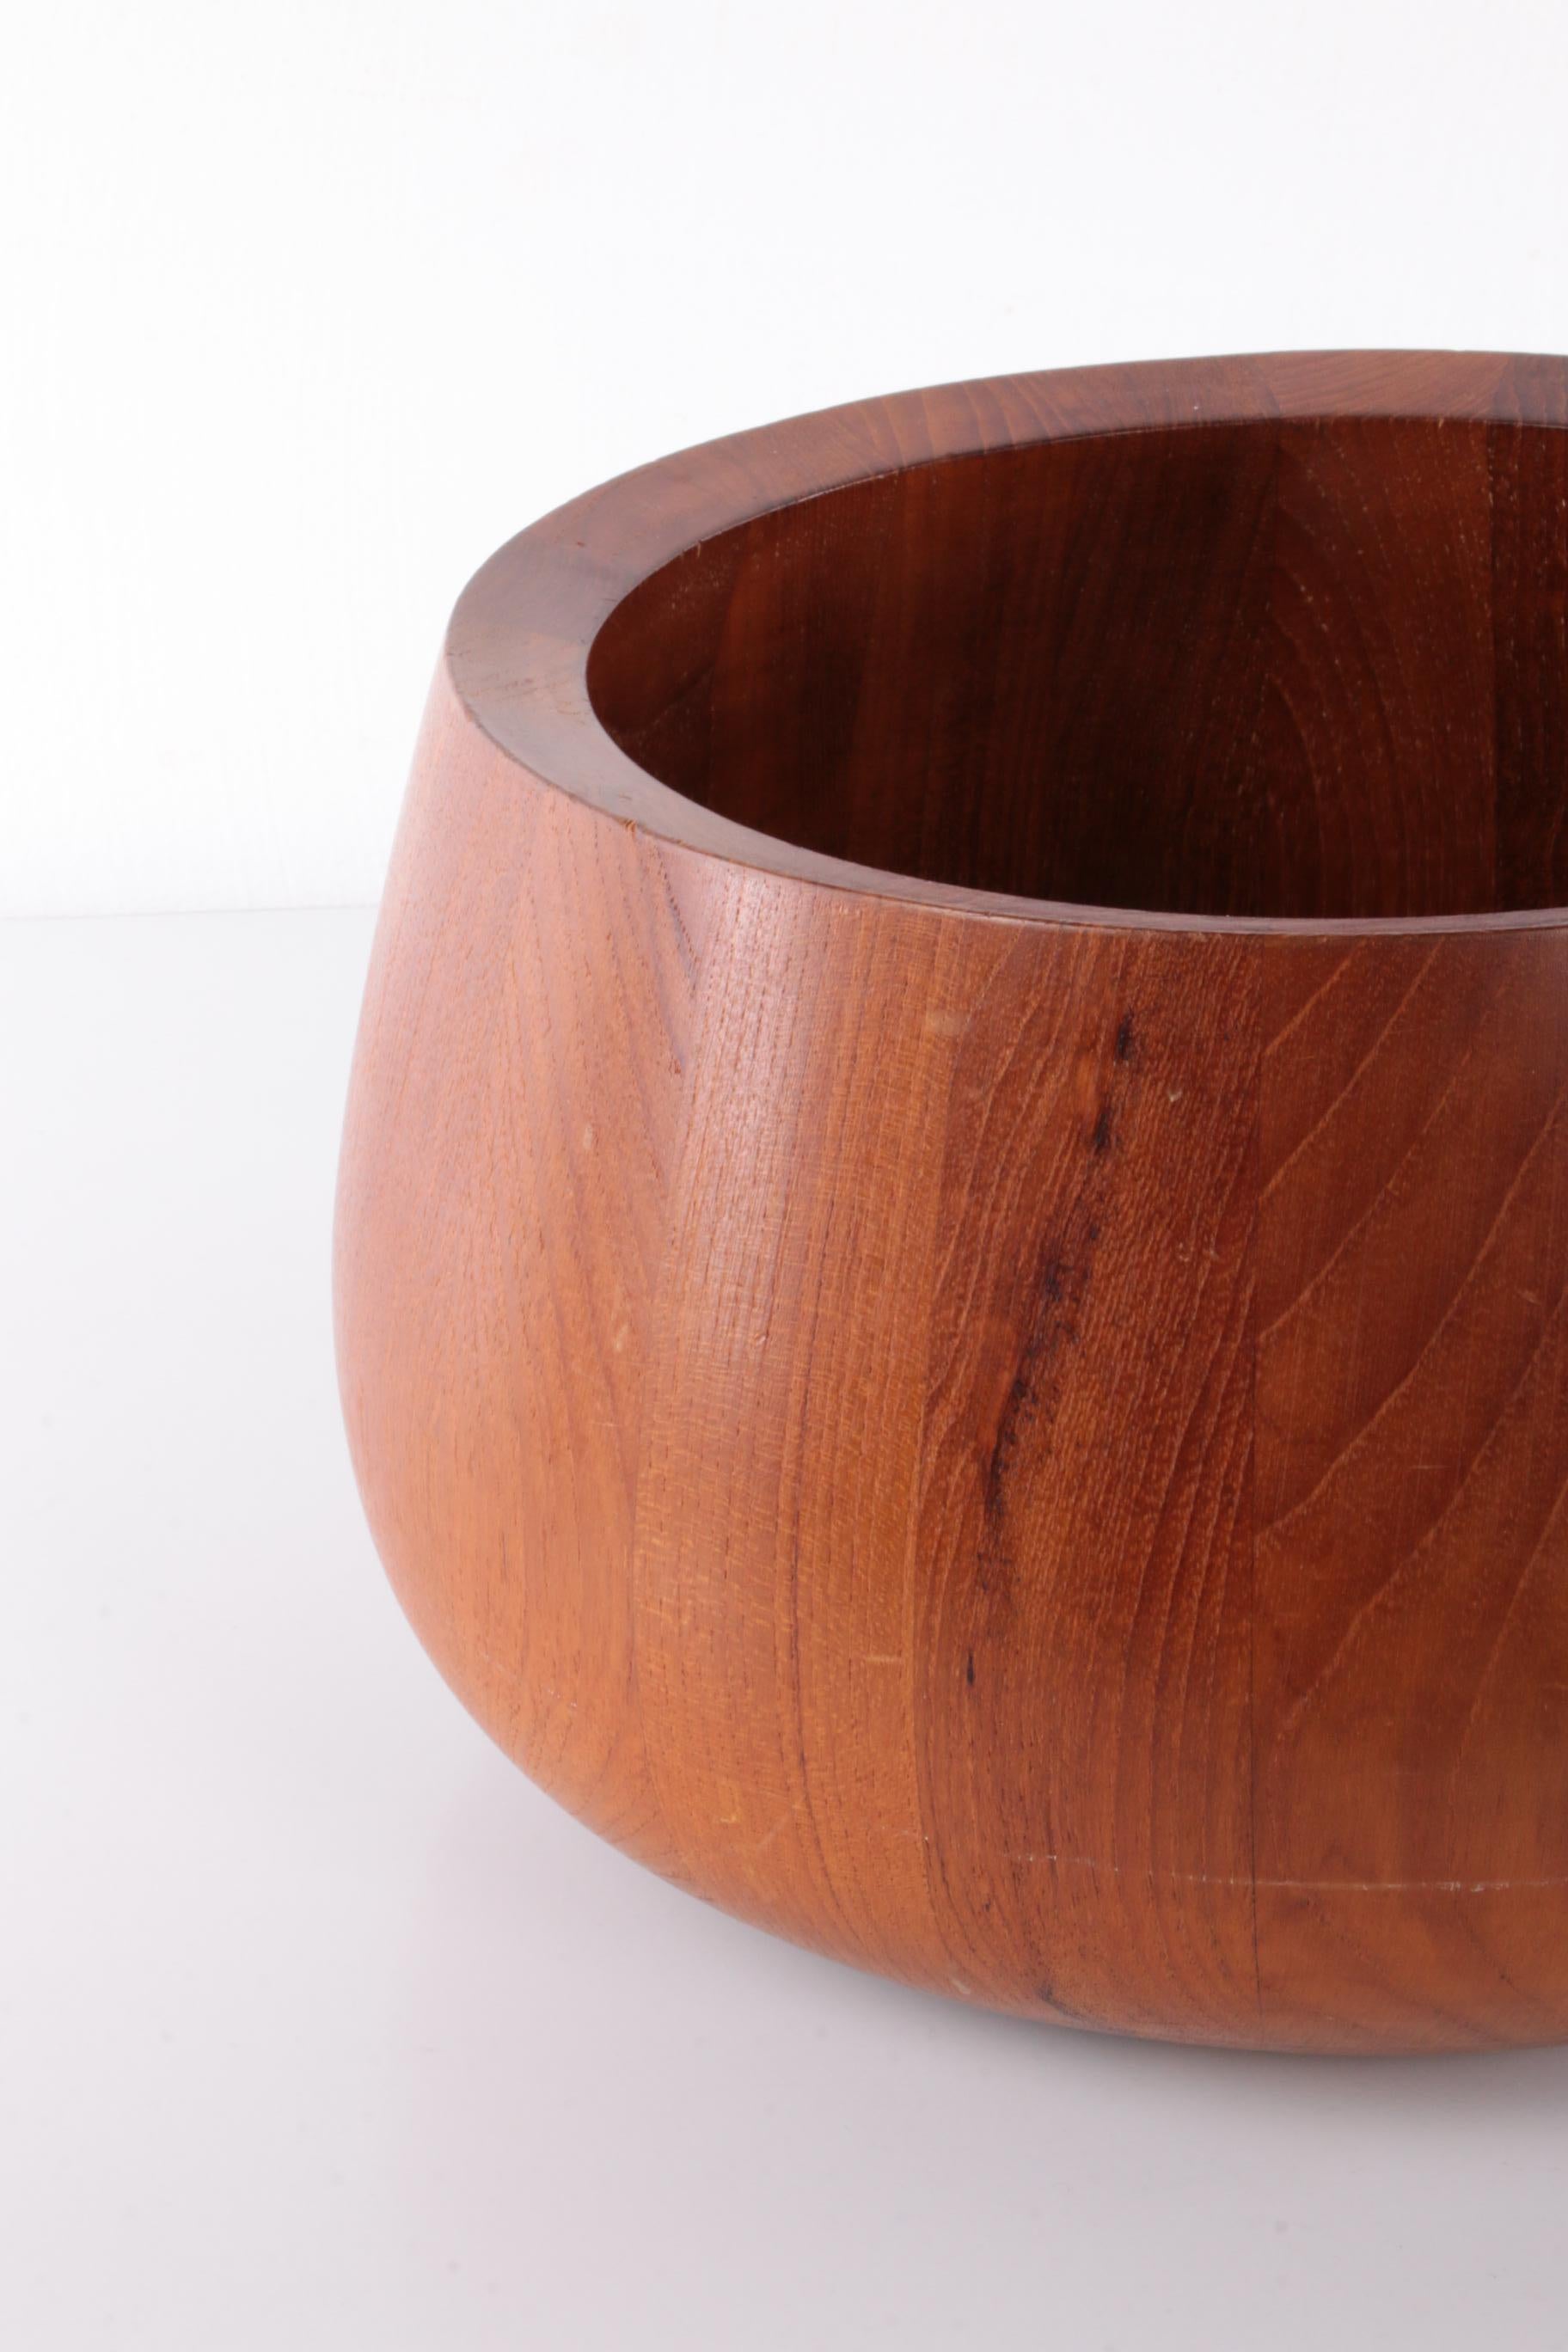 Jens Quistgaard Teak Wooden Bowl with Salad Cutlery by Dansk Design 2